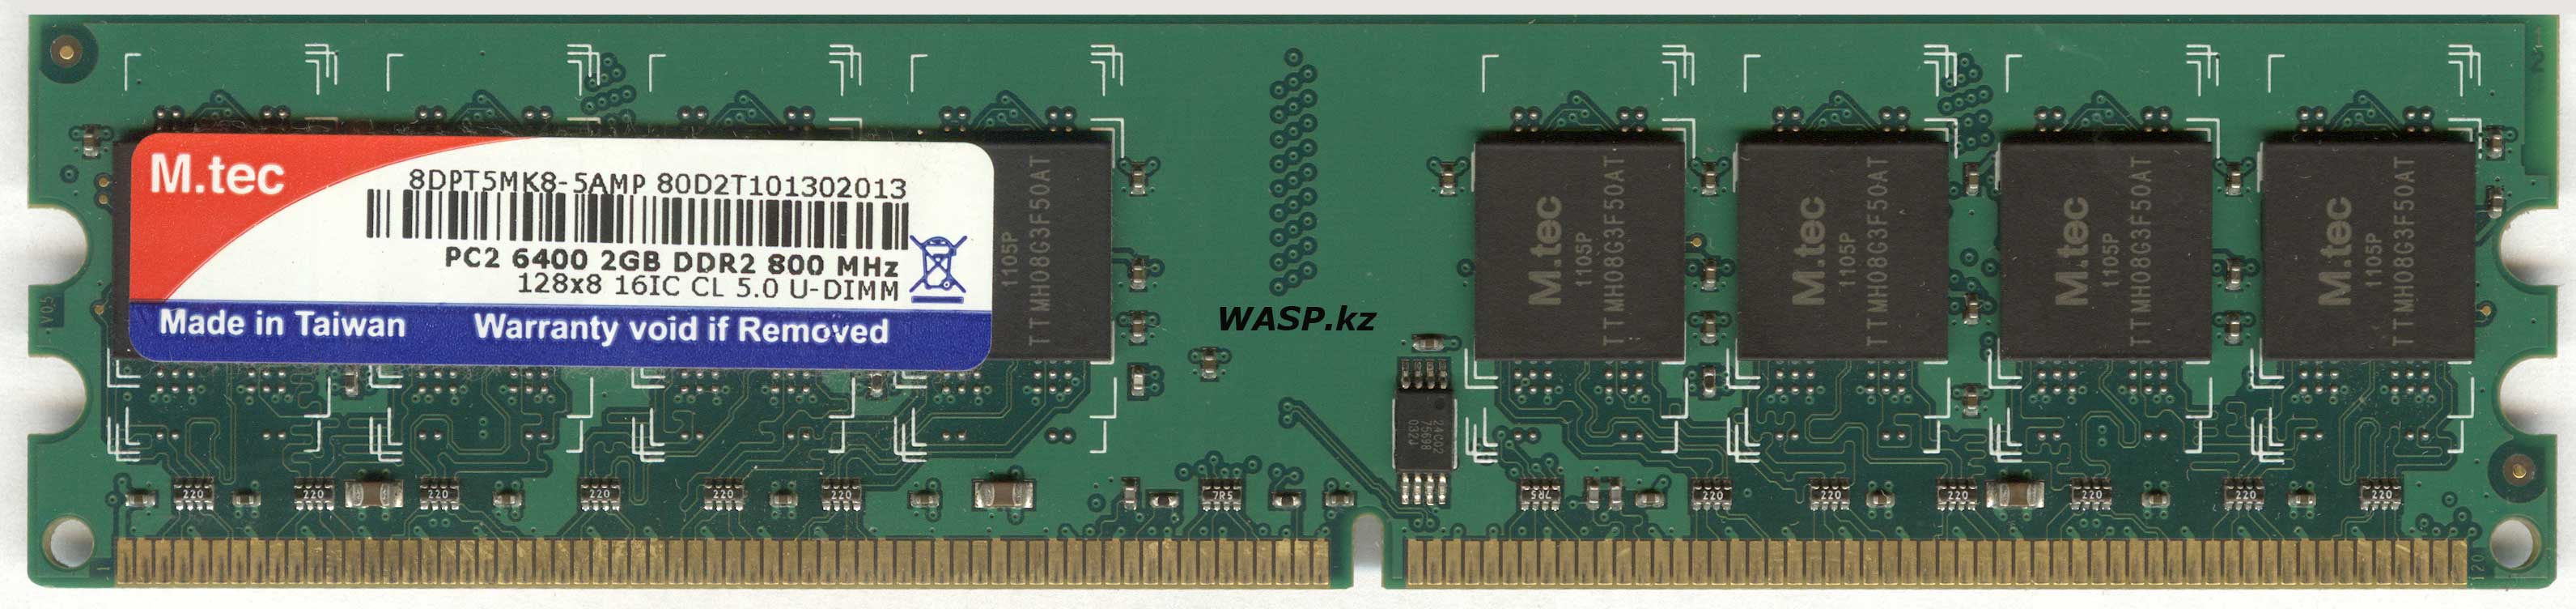 M.tec 8DPT5MK8-5AMP оперативная память DDR2 обзор